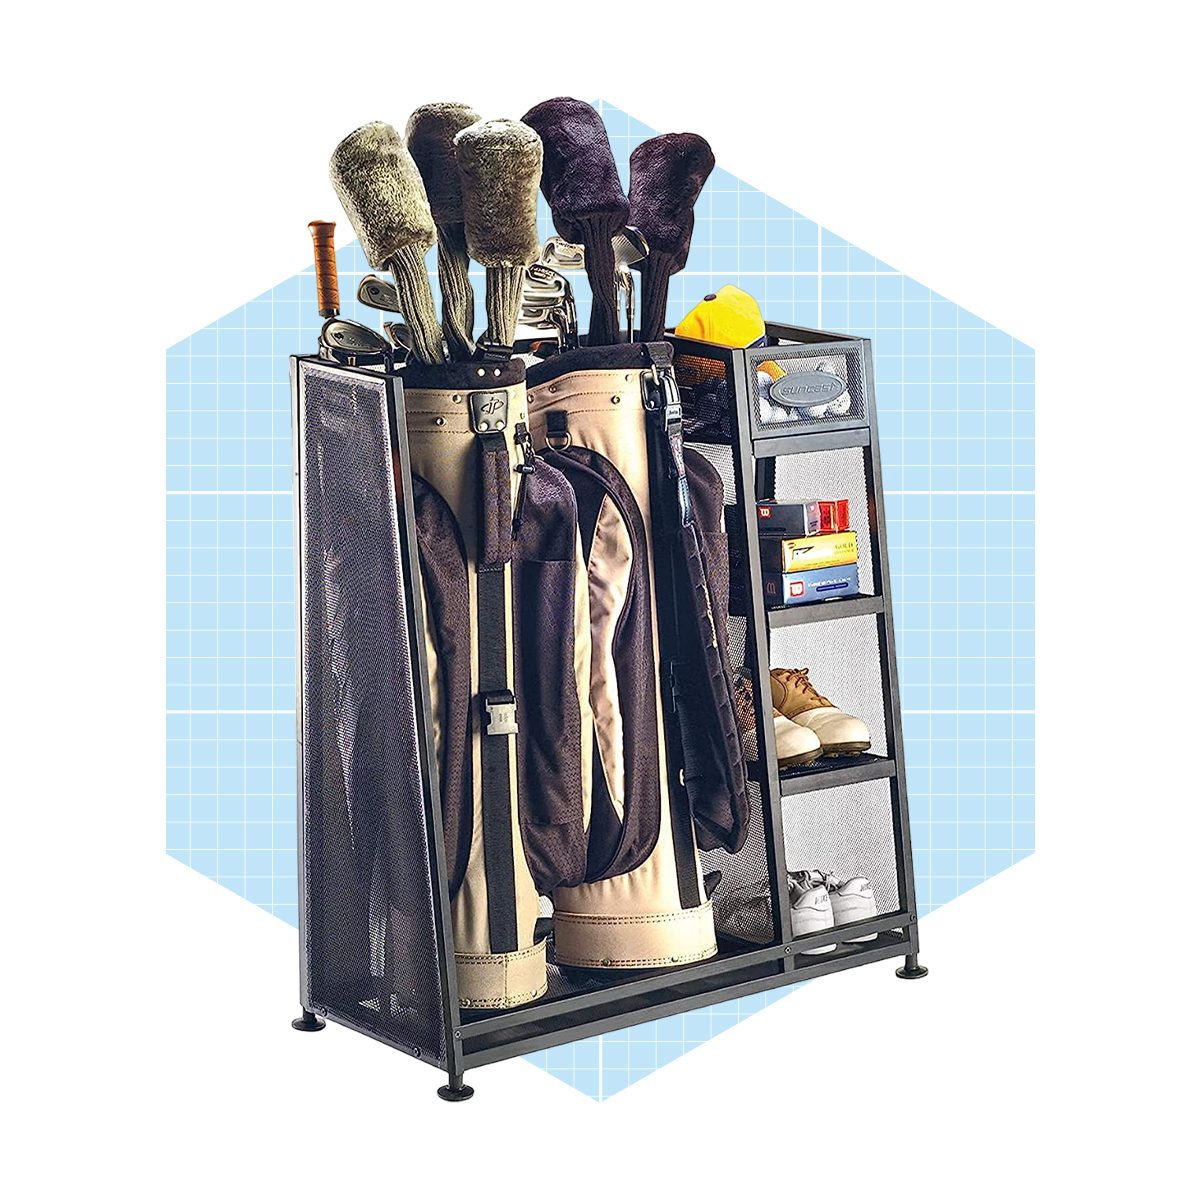 Mythinglogic Golf Storage Garage Organizer,Golf Bag Storage Stand and Other  Golfing Equipment Rack